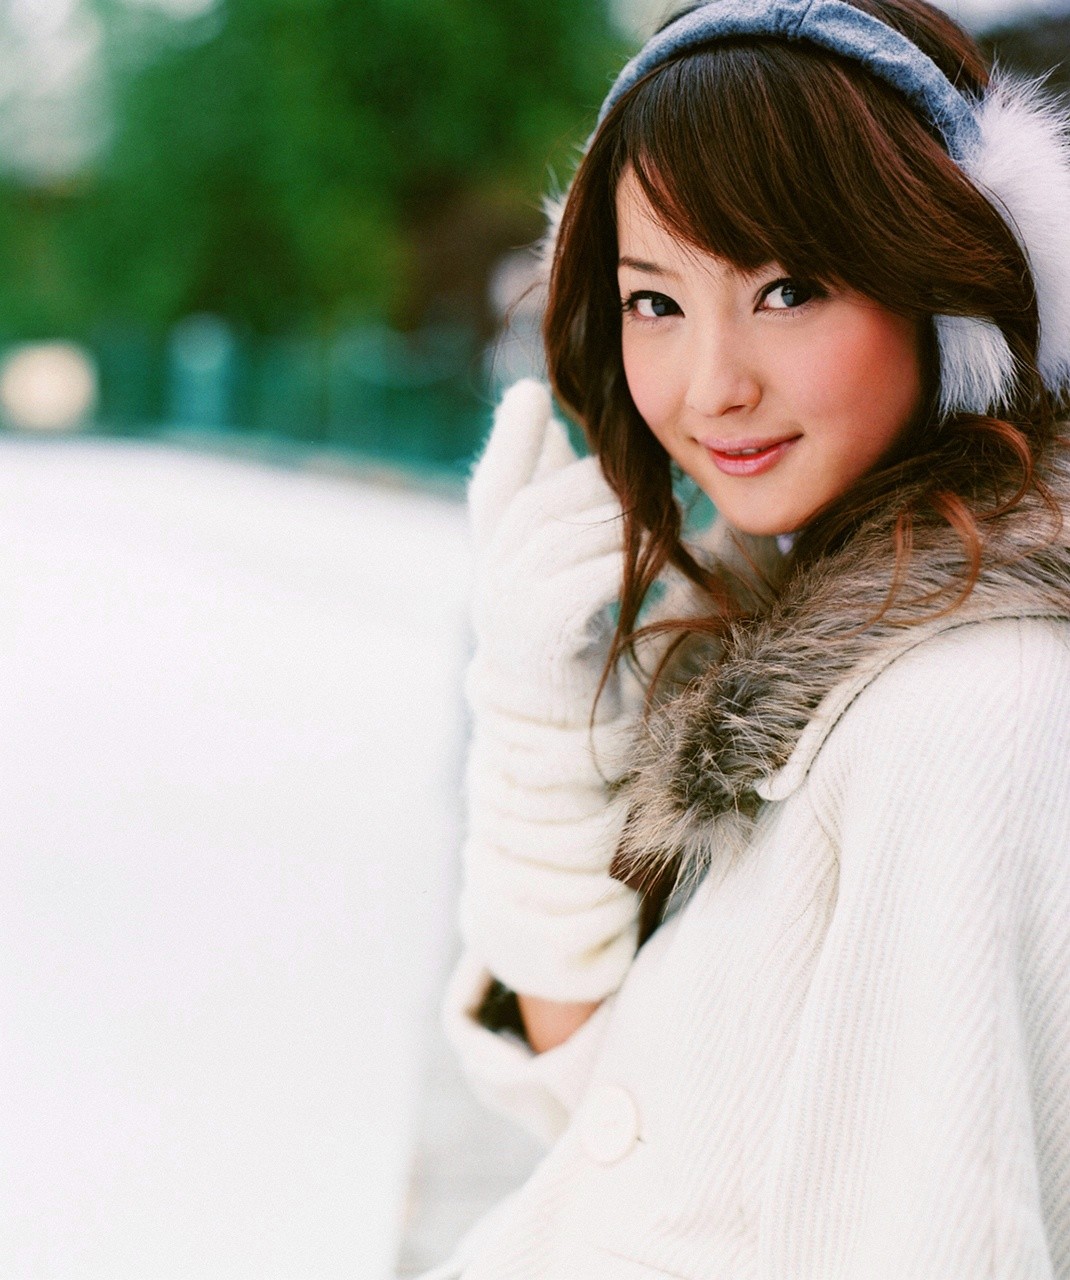 Sasaki Nozomi Asian Visual Young Jum Fur Coats Brunette Brown Eyes Smiling 1070x1280